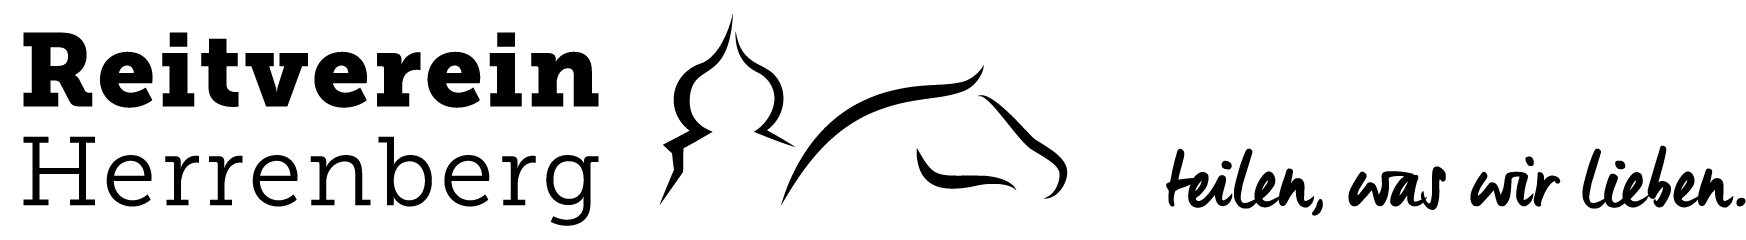 Reitverein Herrenberg Logo